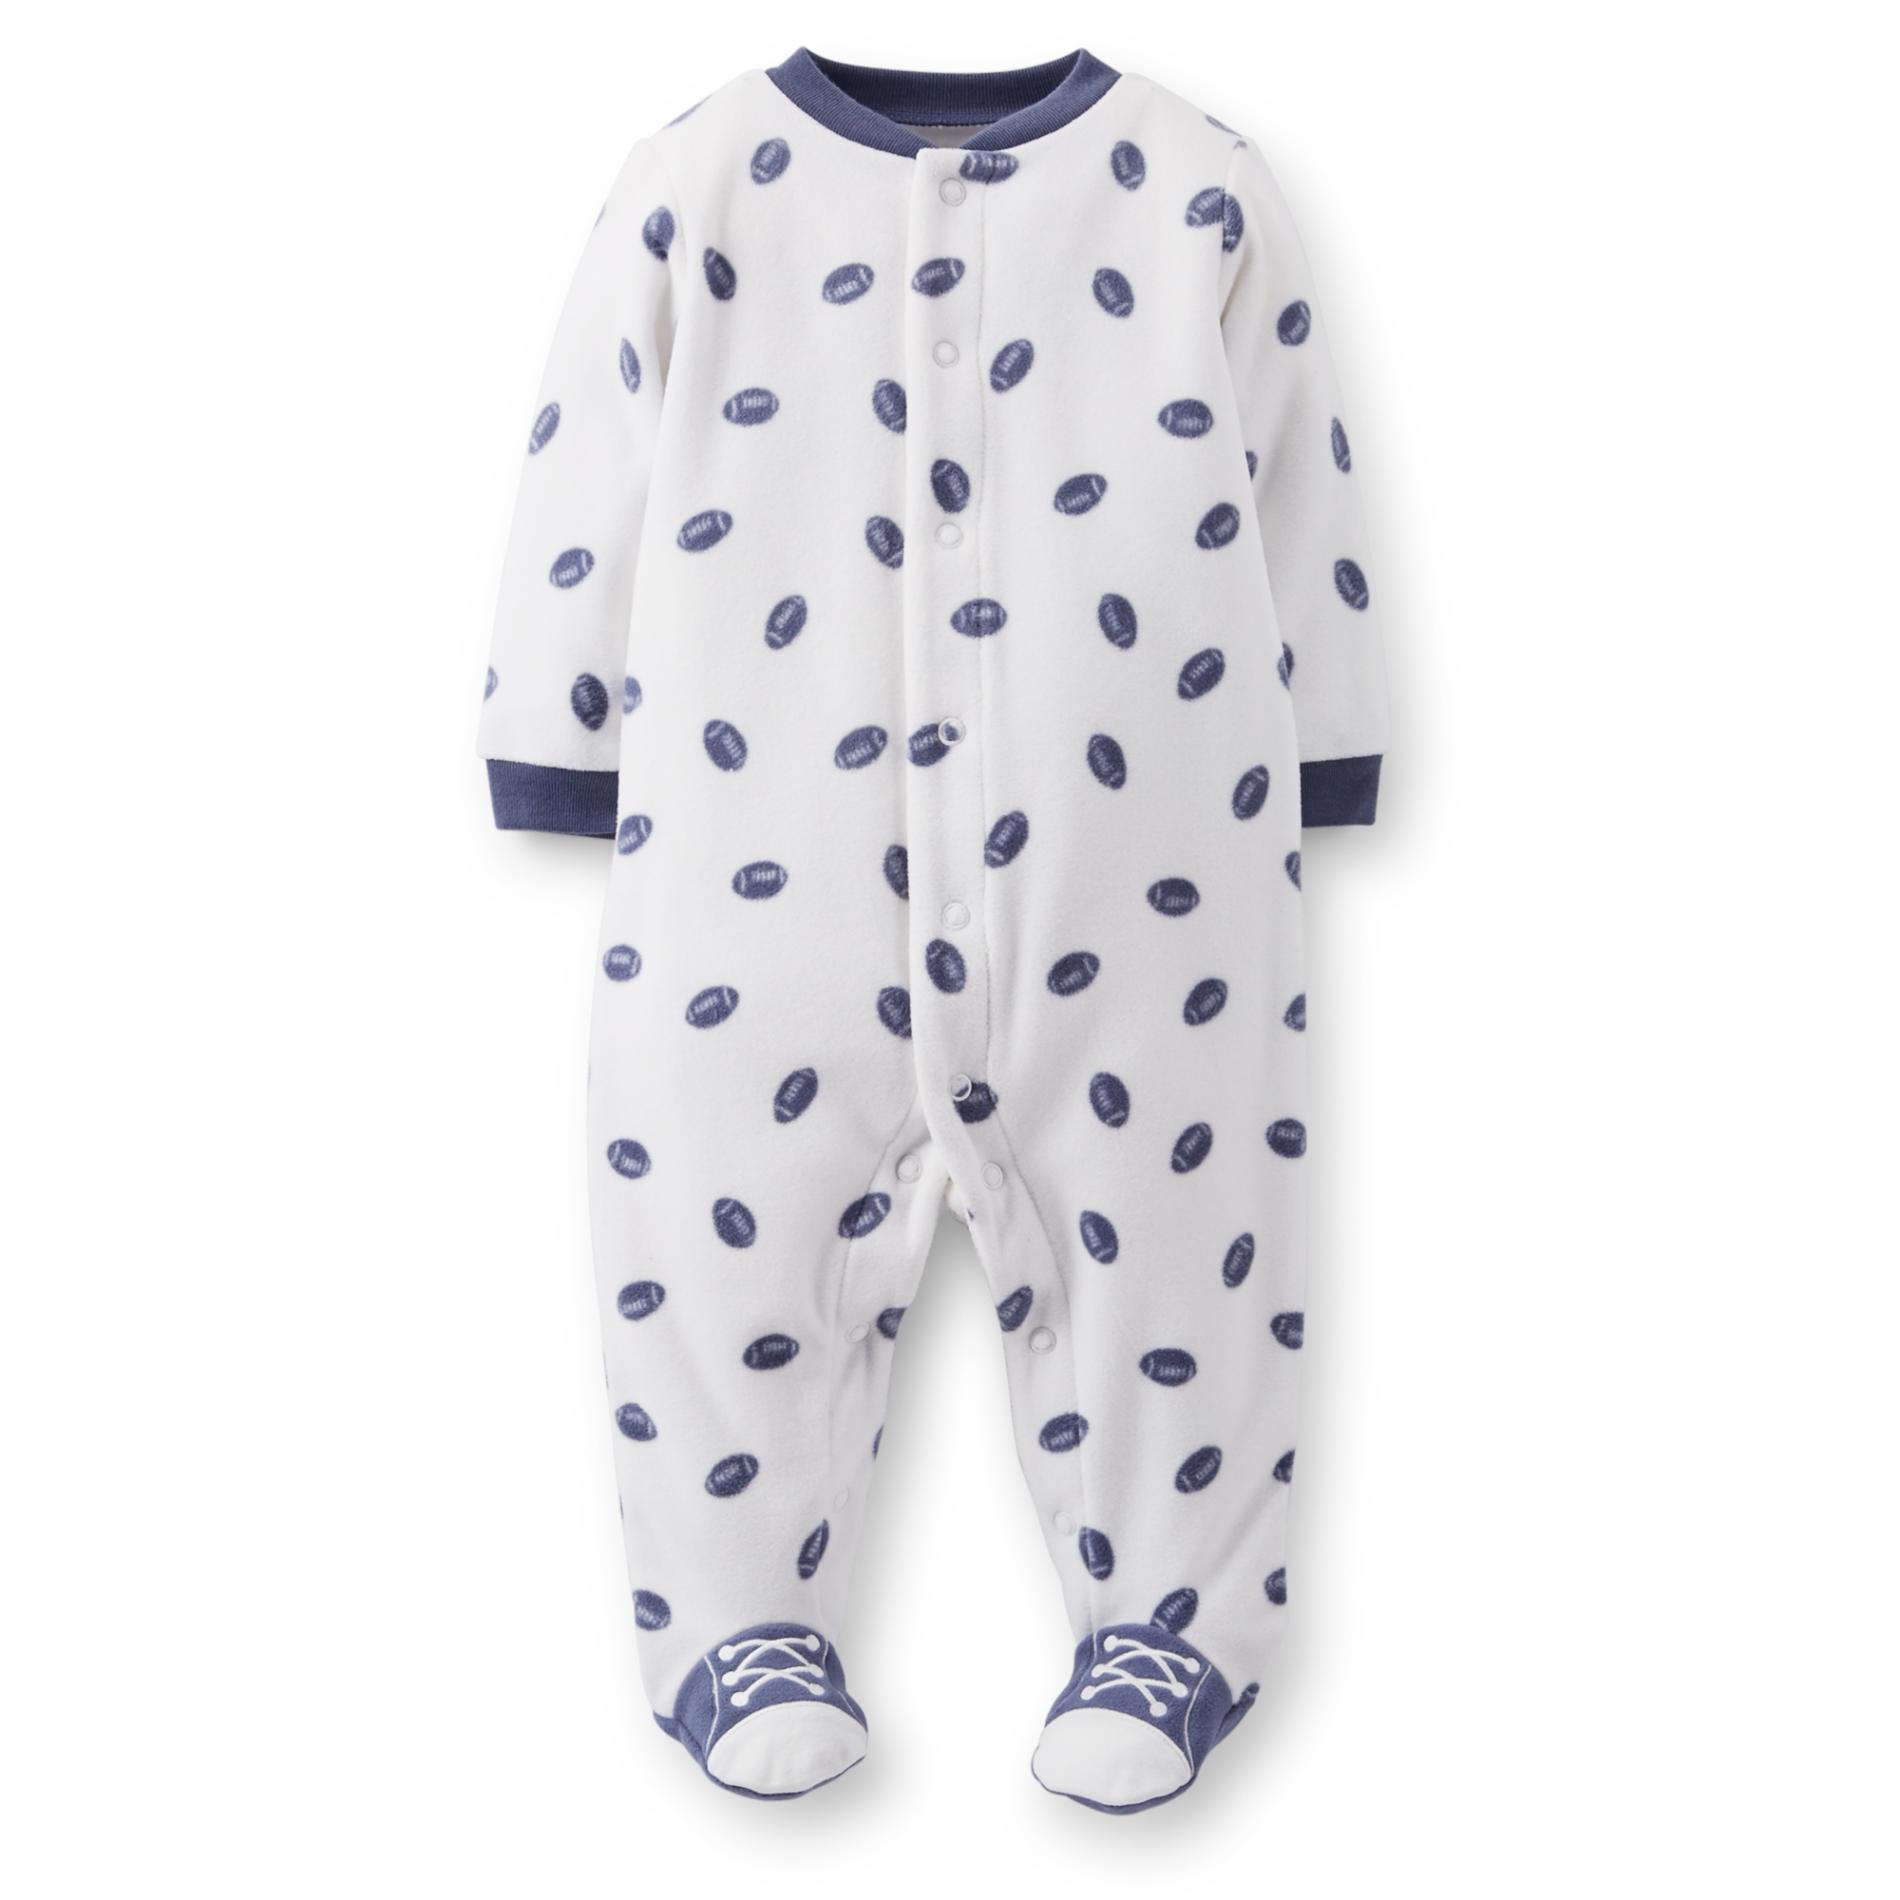 Carter's Newborn Boy's Microfleece Sleeper Pajamas - Polar Bears